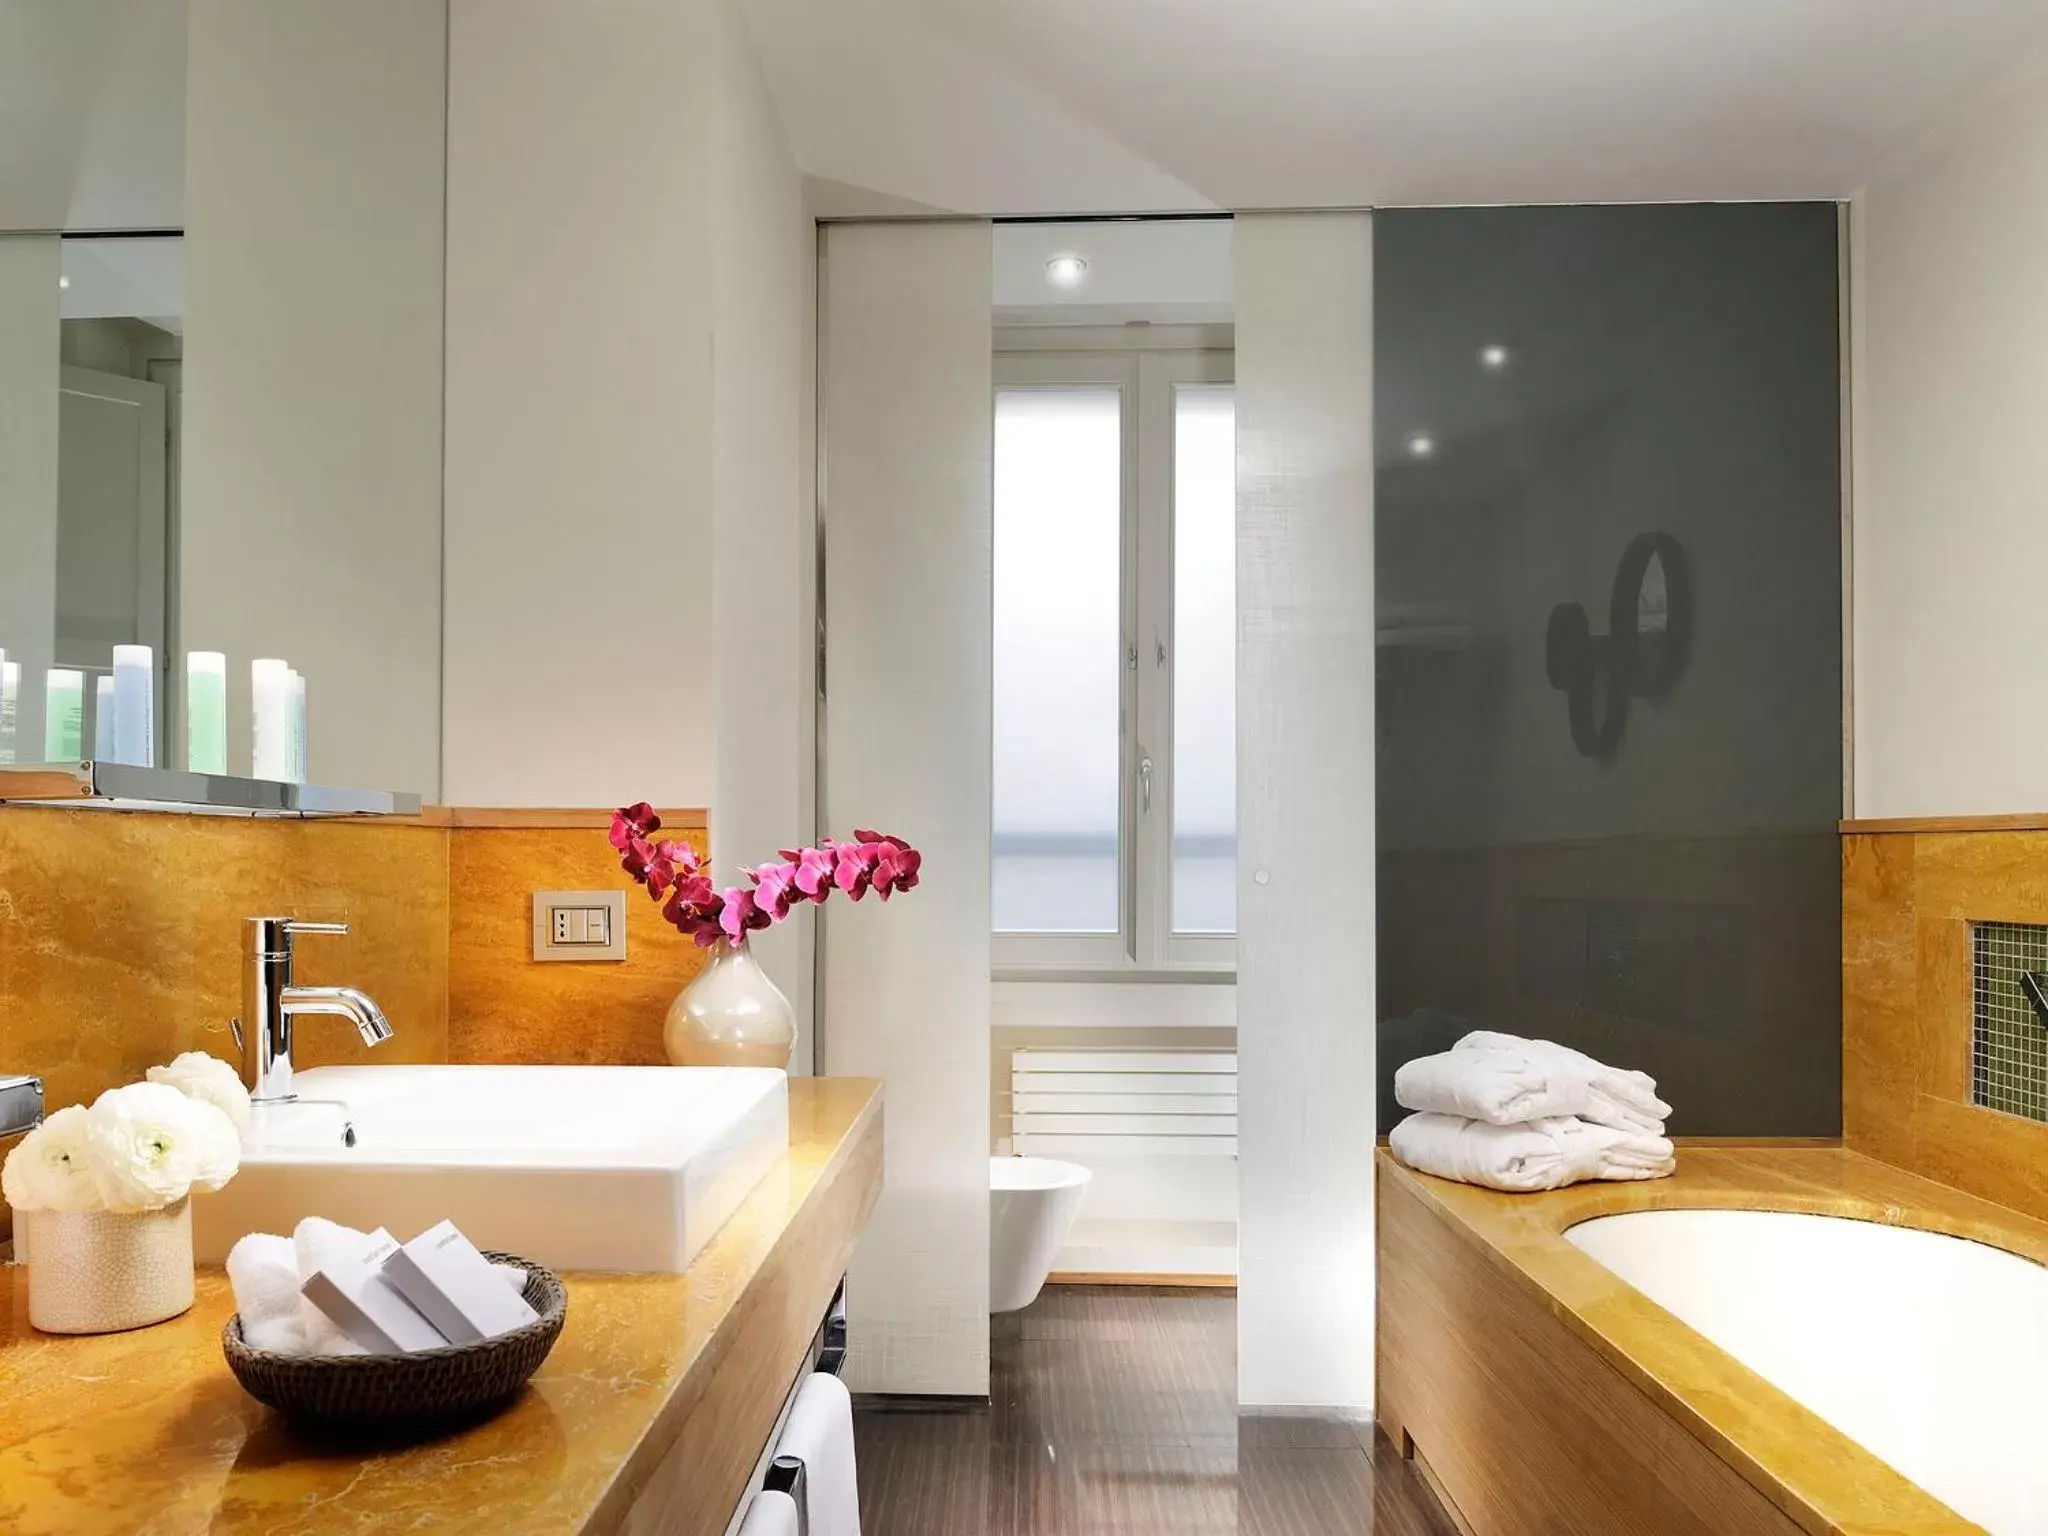 Bathroom in Babuino 181 - Small Luxury Hotels of the World